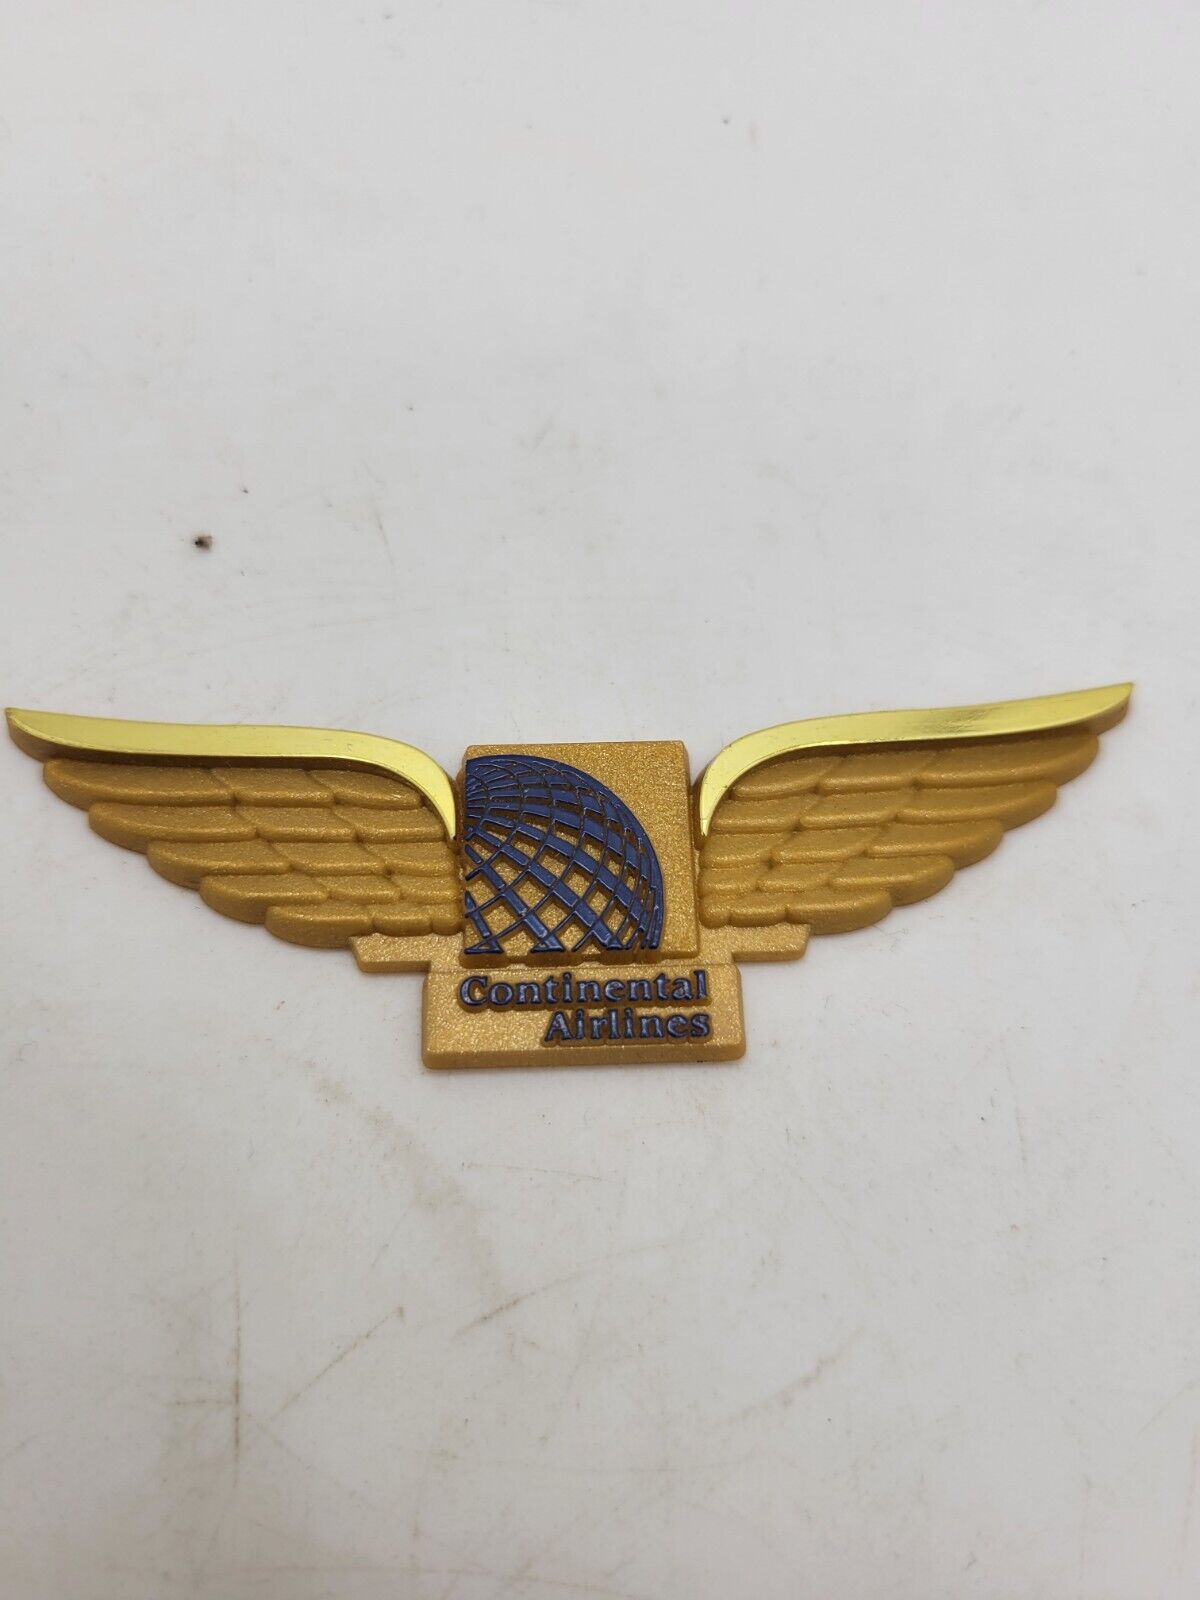 Vintage Continental Airlines Plastic Emblem 